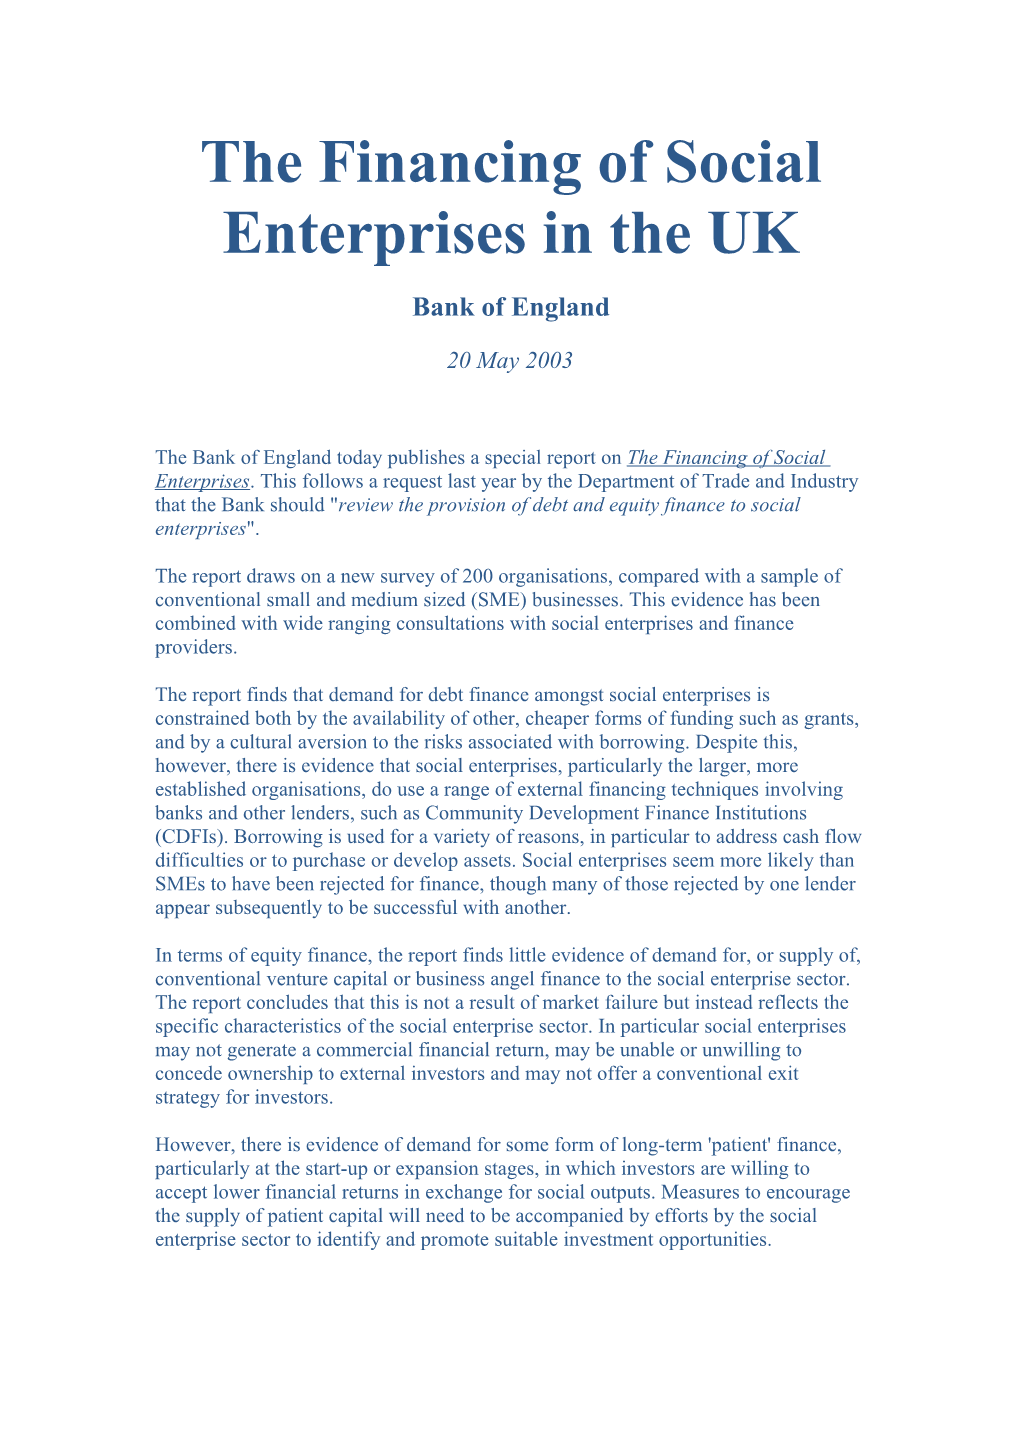 The Financing of Social Enterprises in the UK